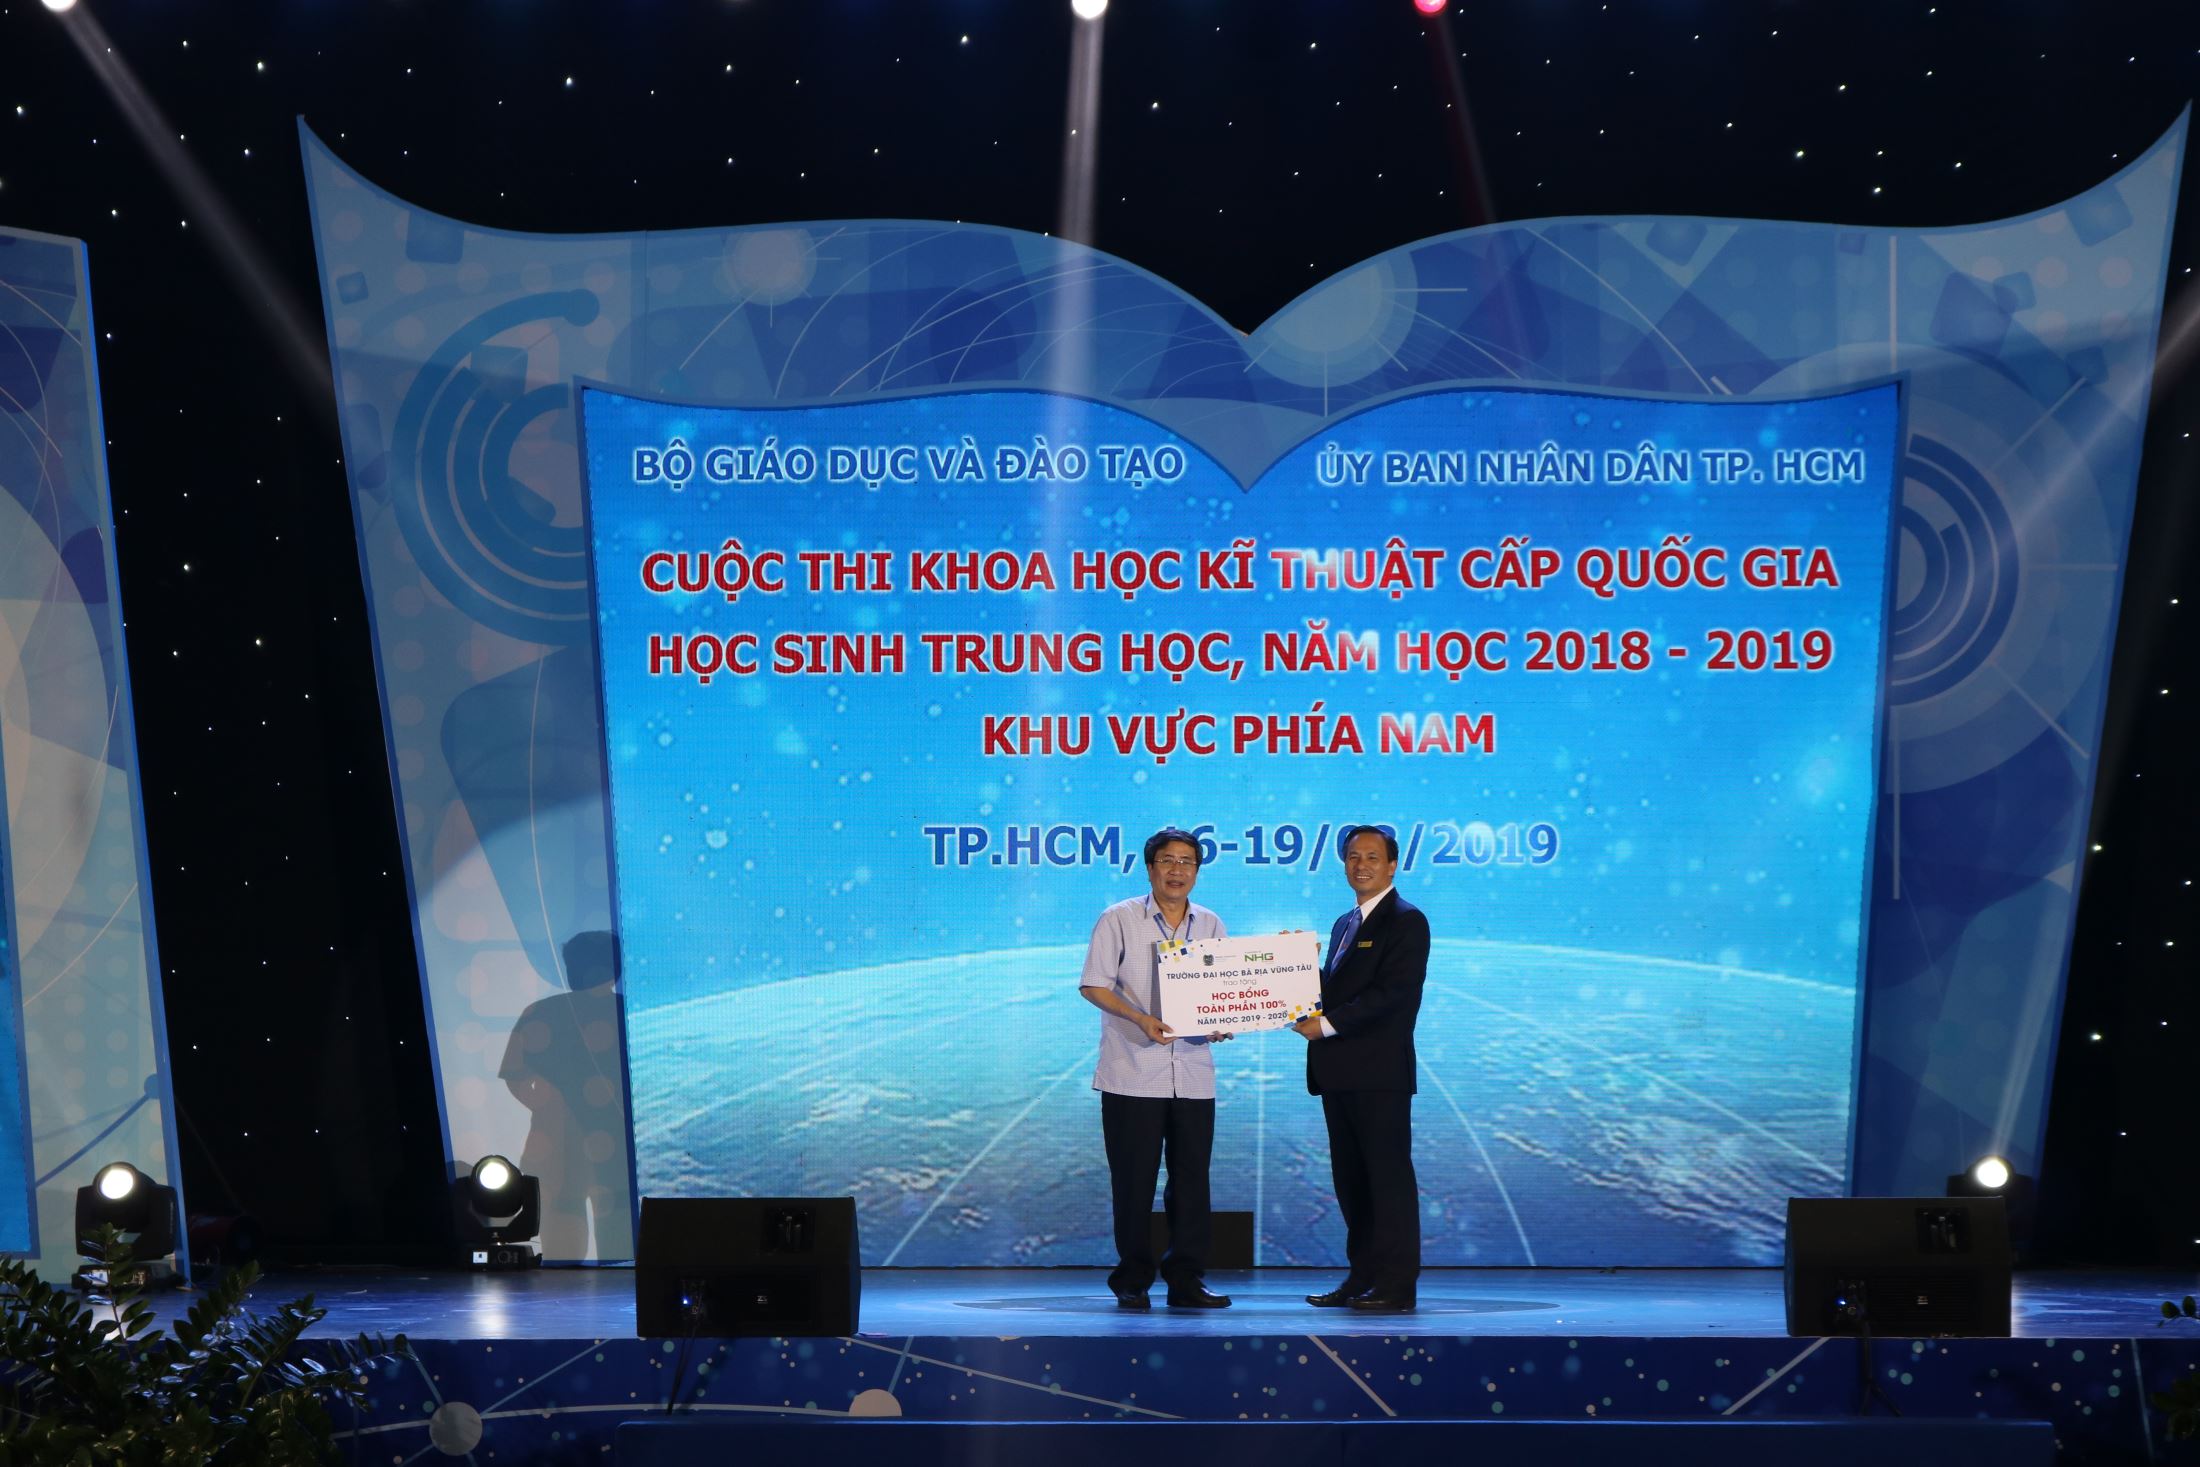 Dr. Vu Van Dong, Vice President of Ba Ria Vung Tau University (BVU) awarding scholarships at the competition.